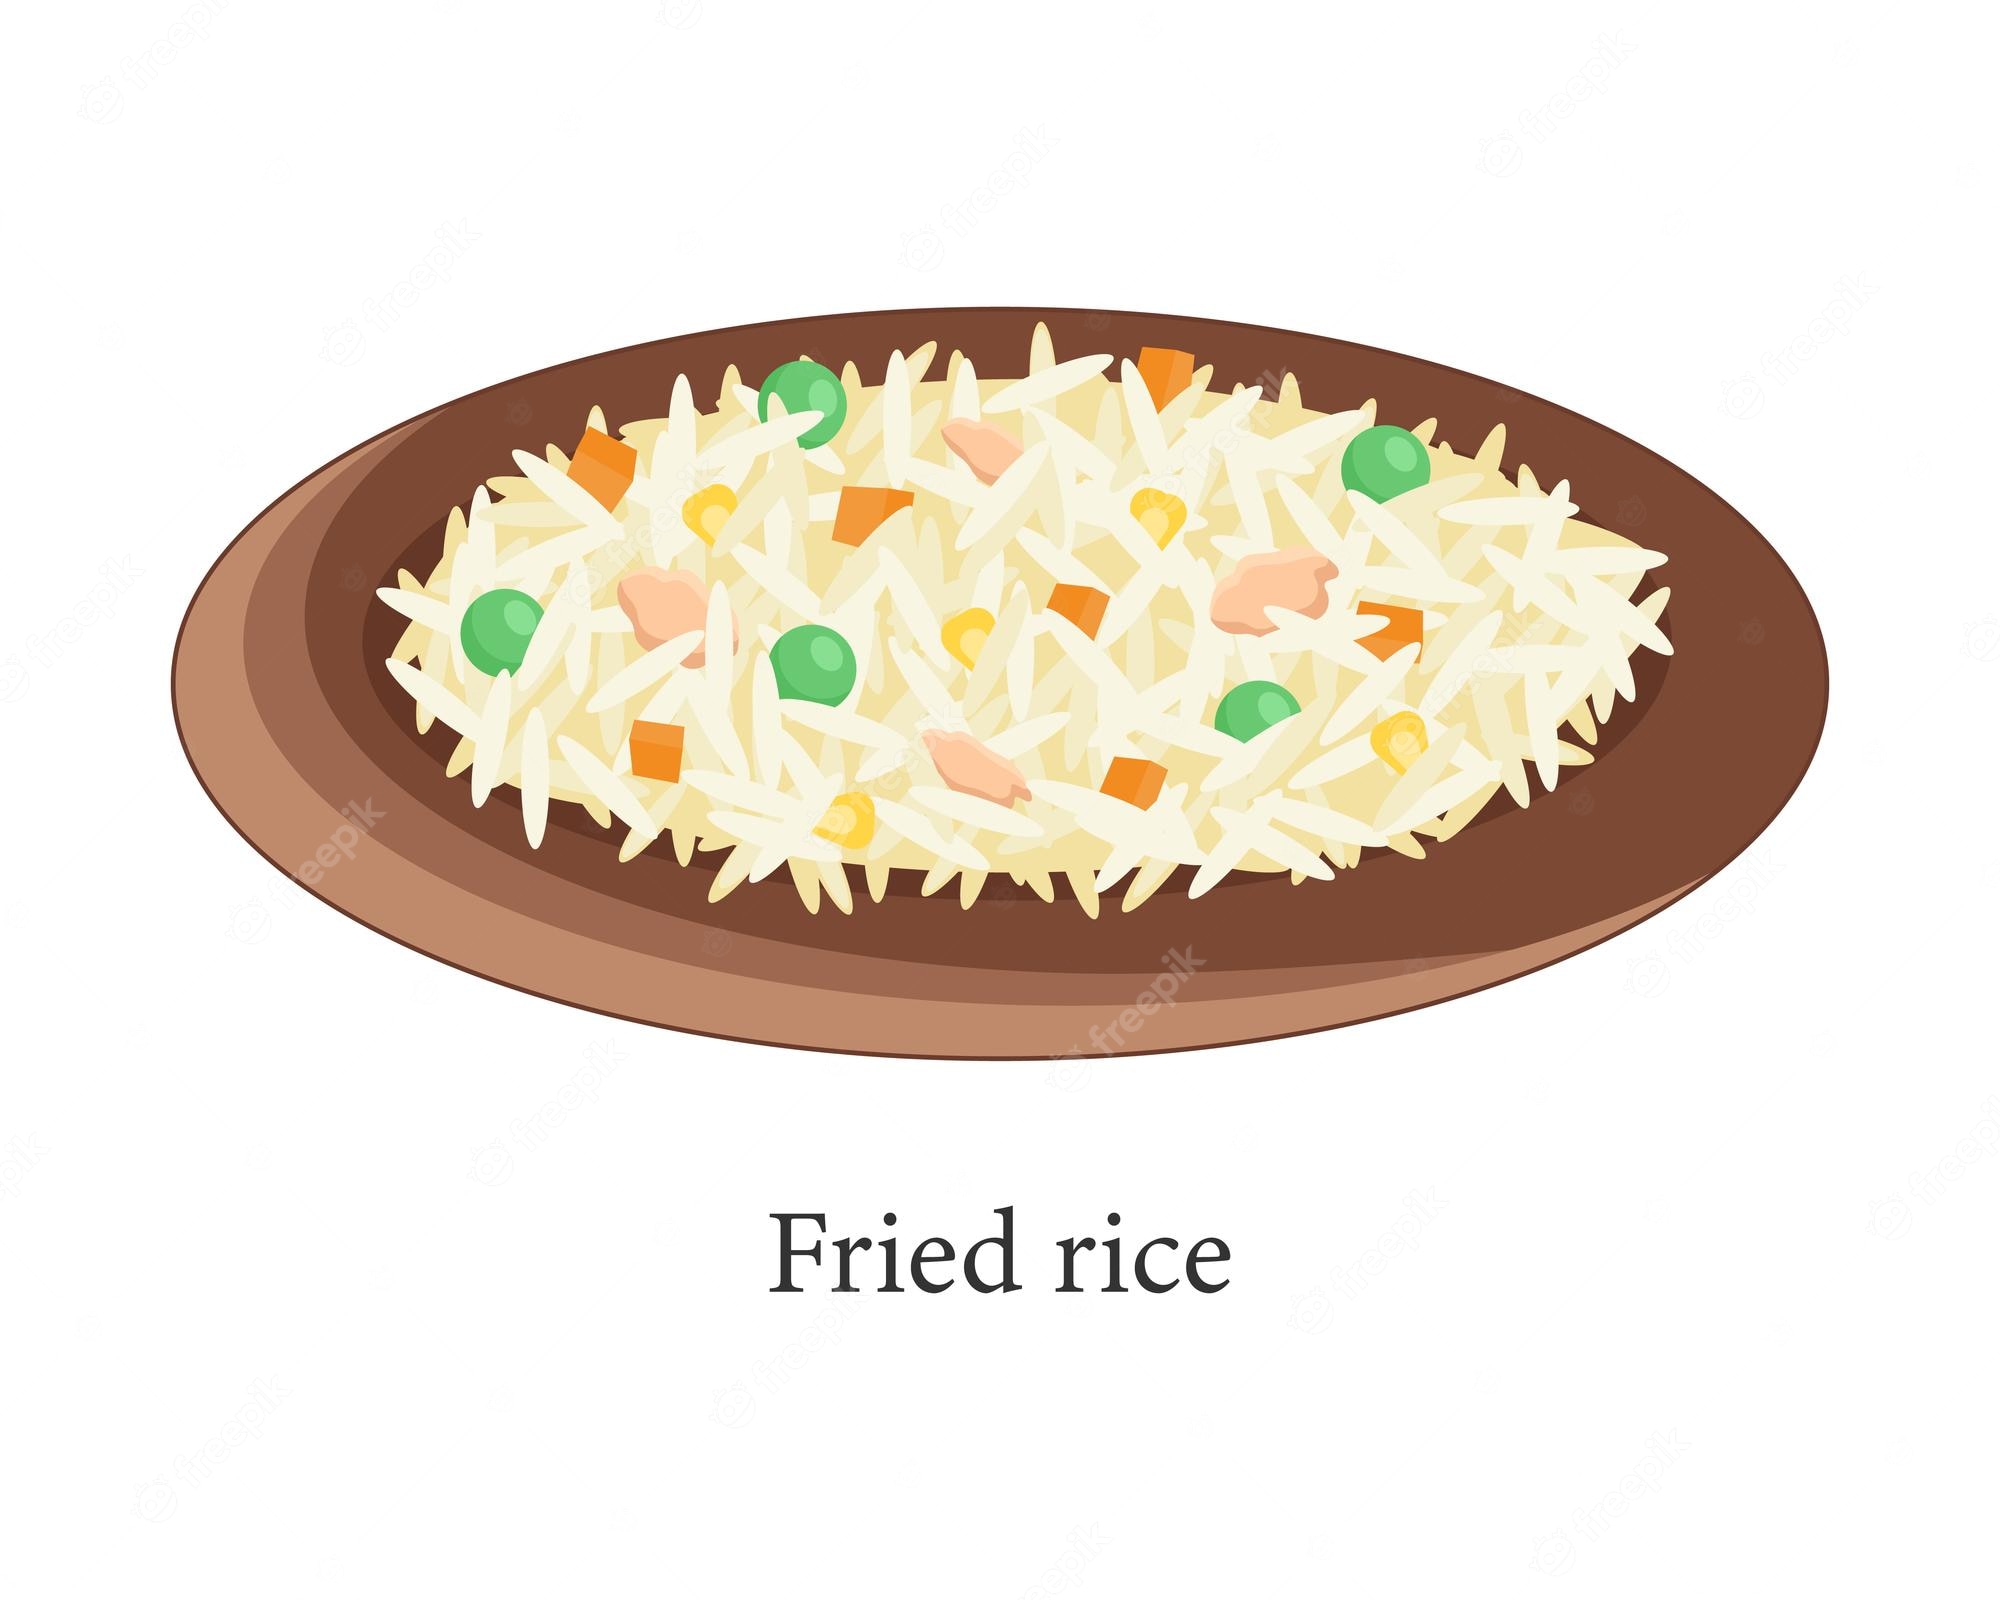 spanish rice clipart